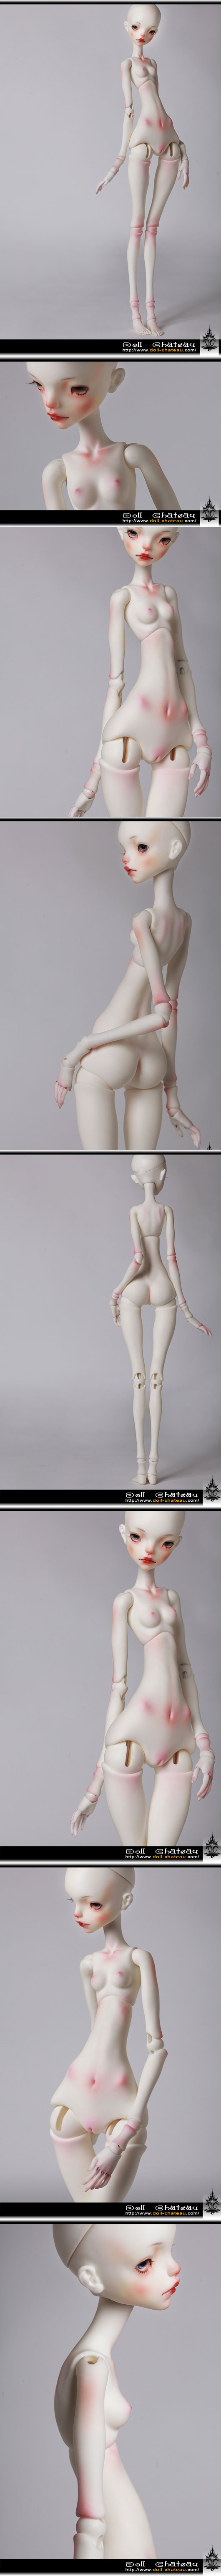 BJD K-body-11 Girl Boll-jointed doll